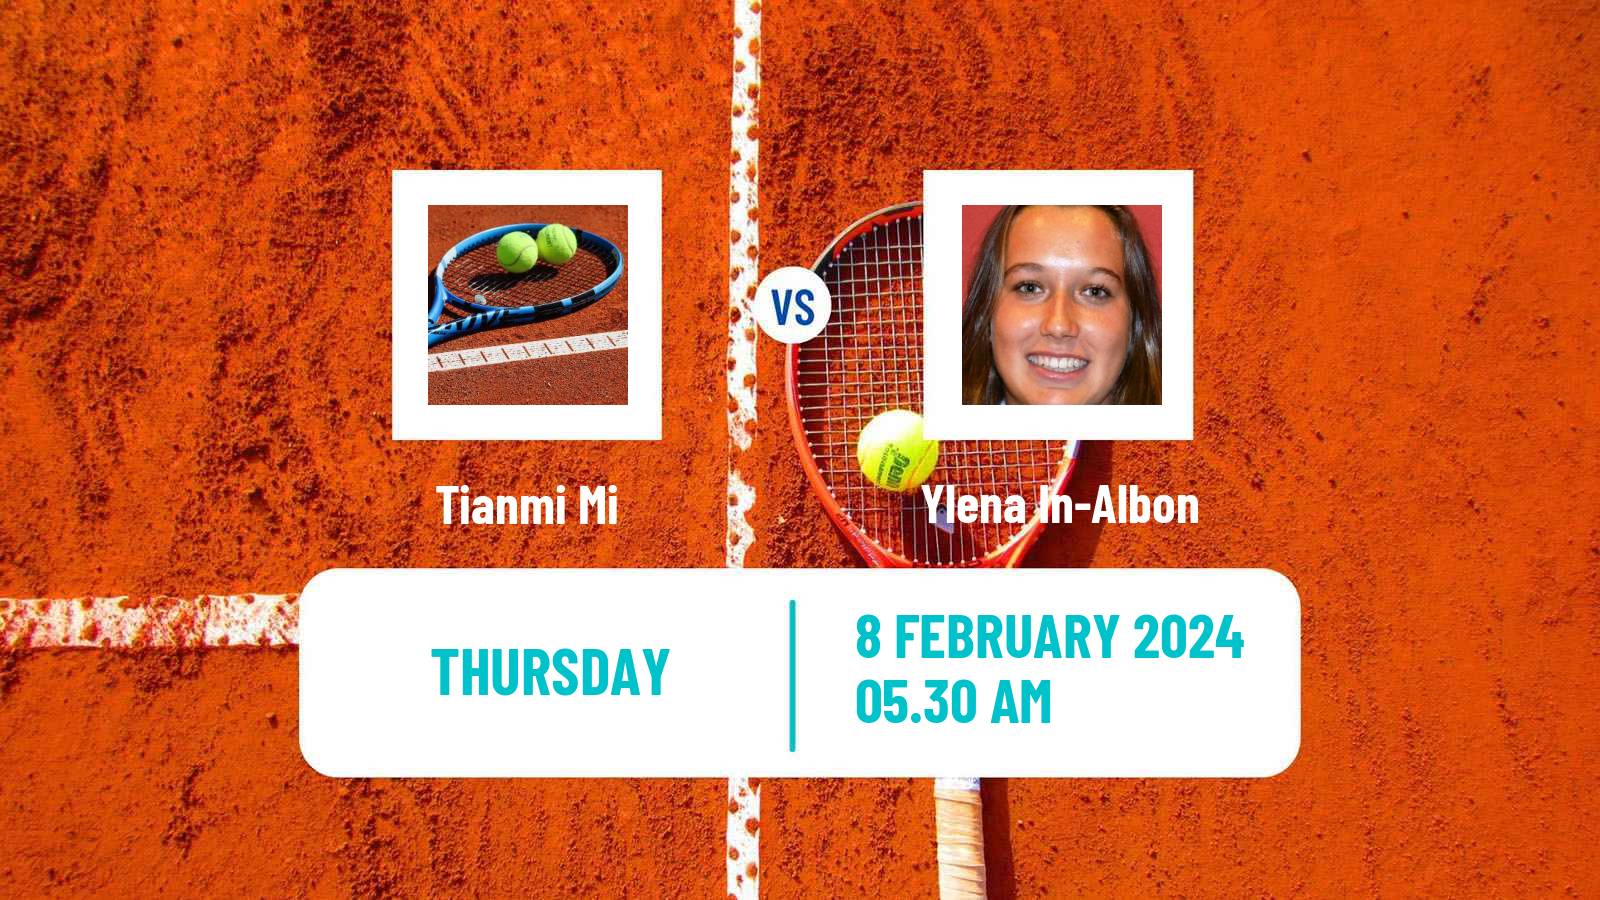 Tennis ITF W35 Antalya 2 Women Tianmi Mi - Ylena In-Albon